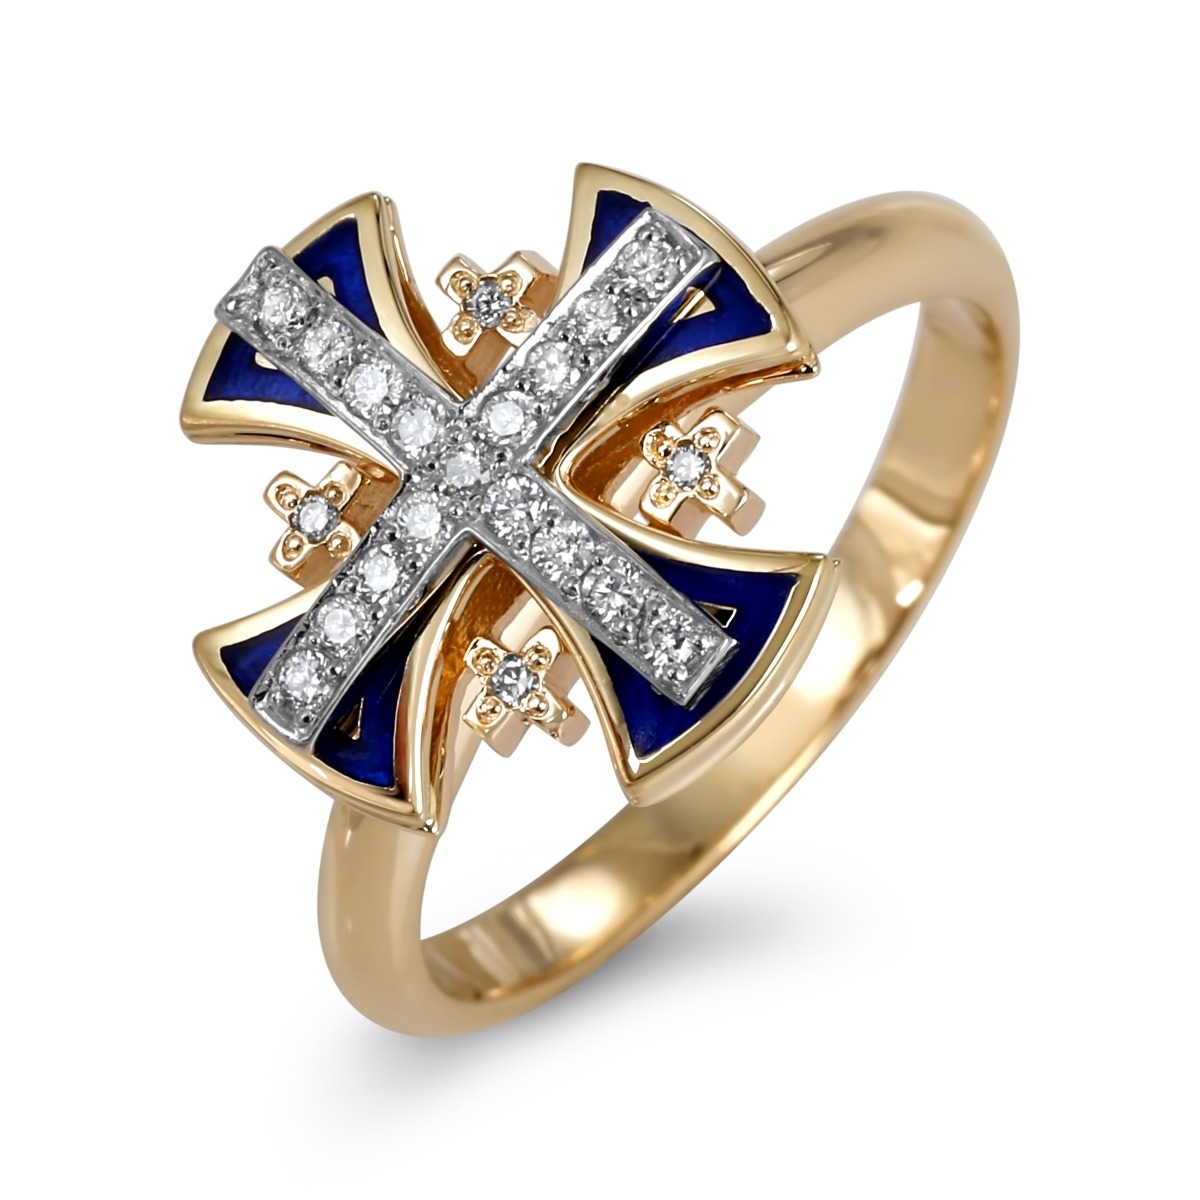 Anbinder 14K Yellow Gold, Enamel and Diamond Splayed Jerusalem Cross Ring with 21 Diamonds - 1